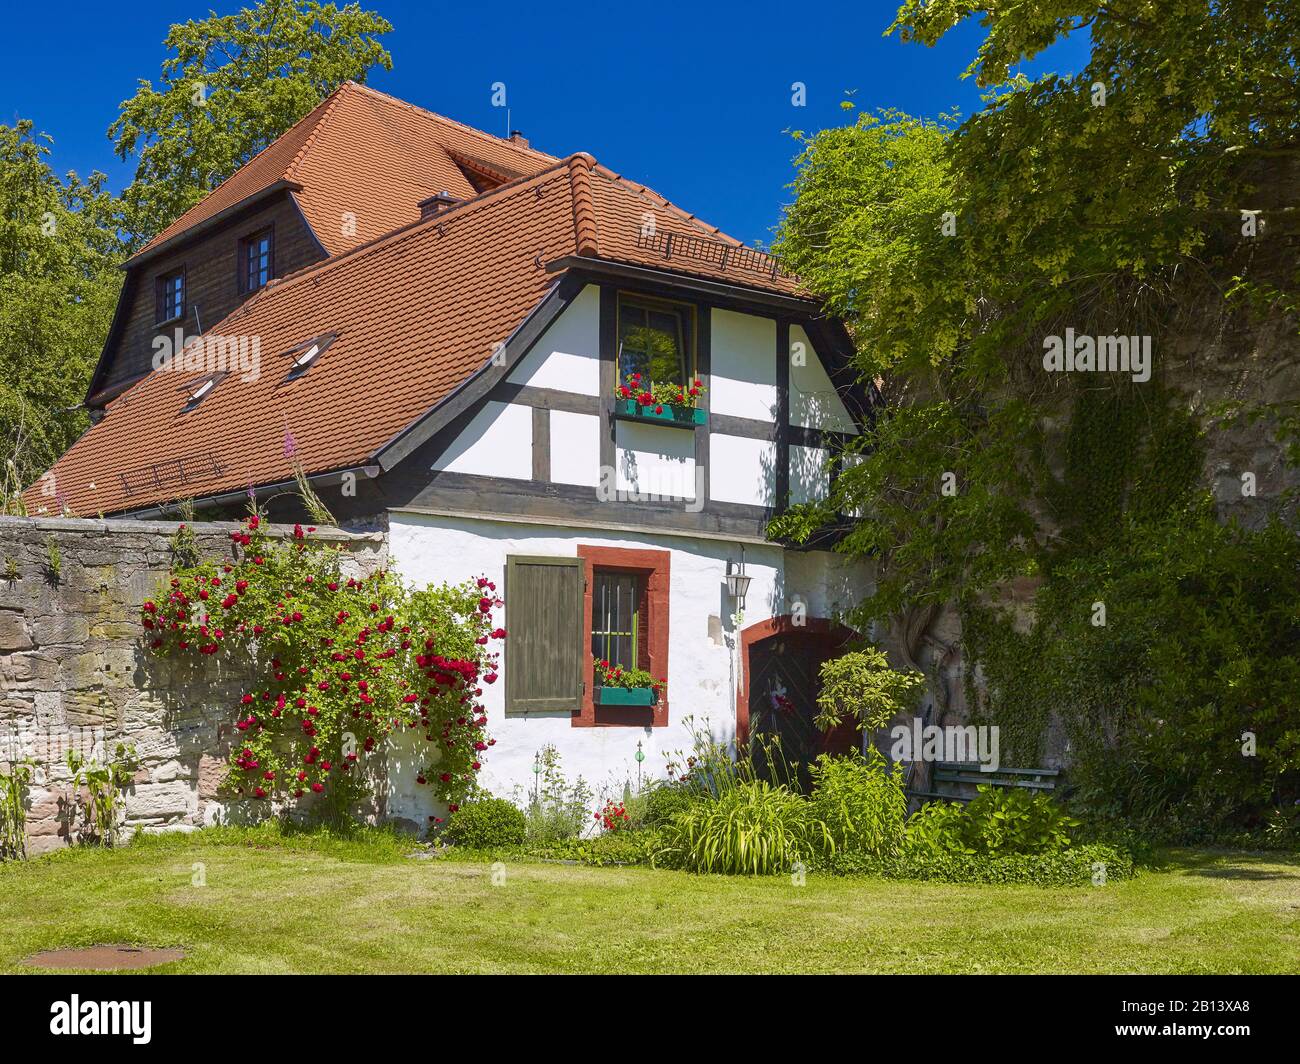 Gardener's house on Schloss Wilhelmsburg in Schmalkalden,Thuringia,Germany Stock Photo